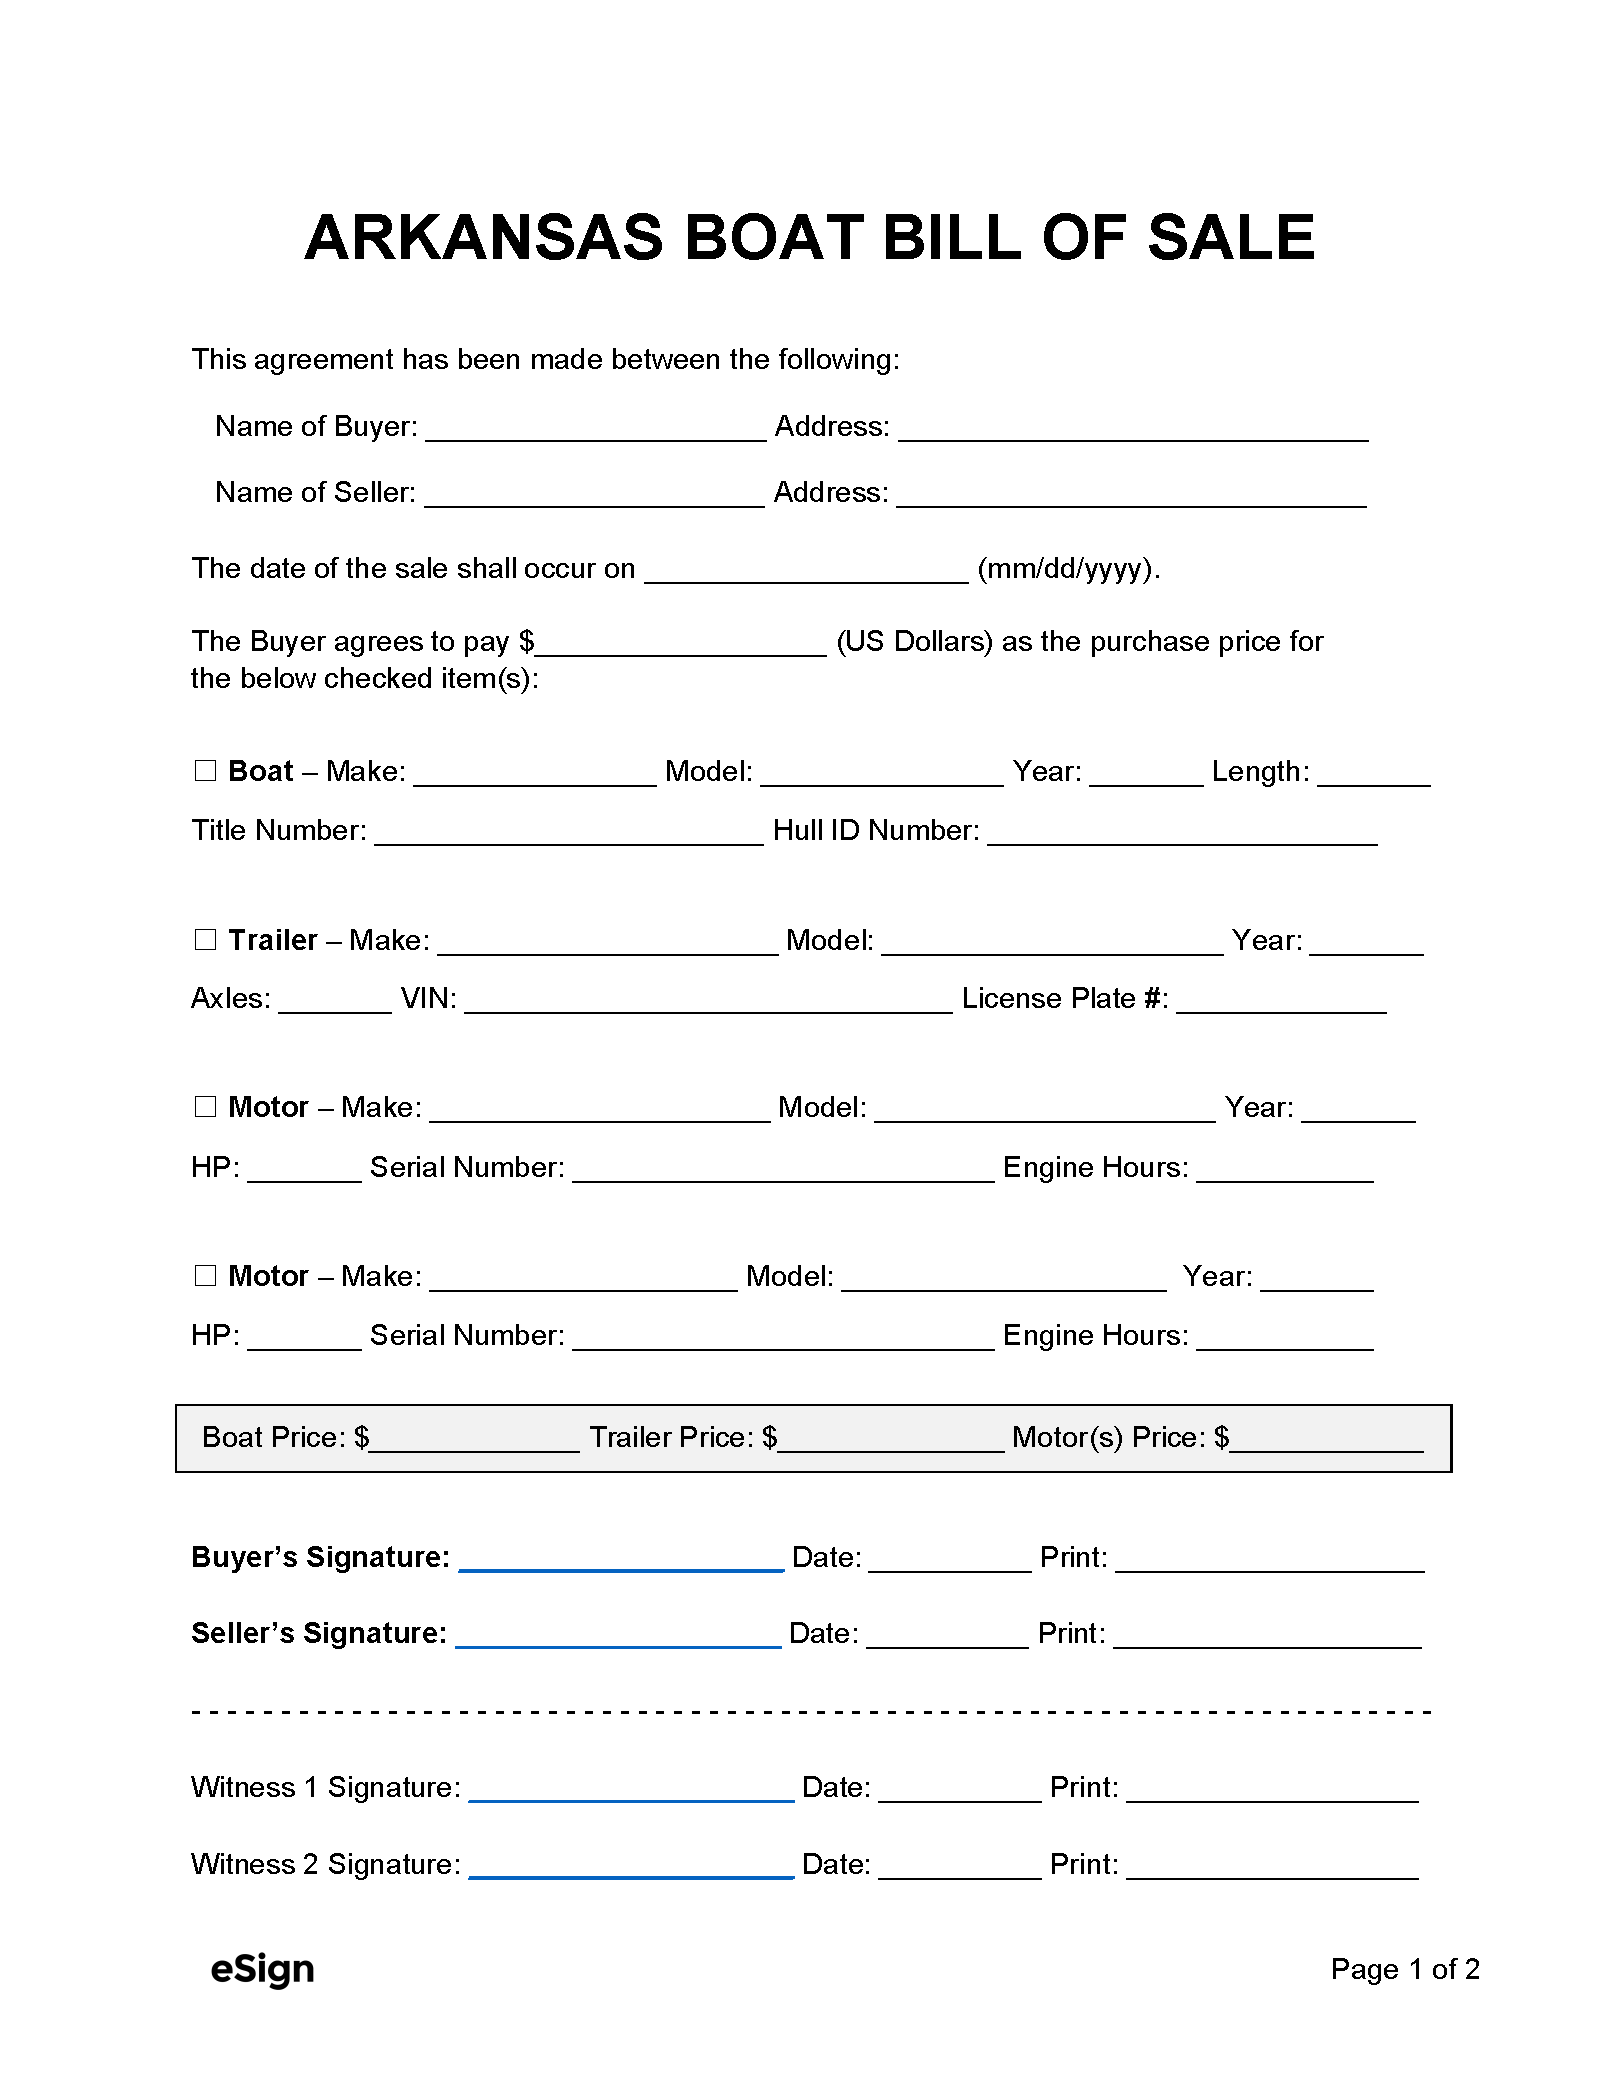 Free Arkansas Boat Bill of Sale Form - PDF | Word